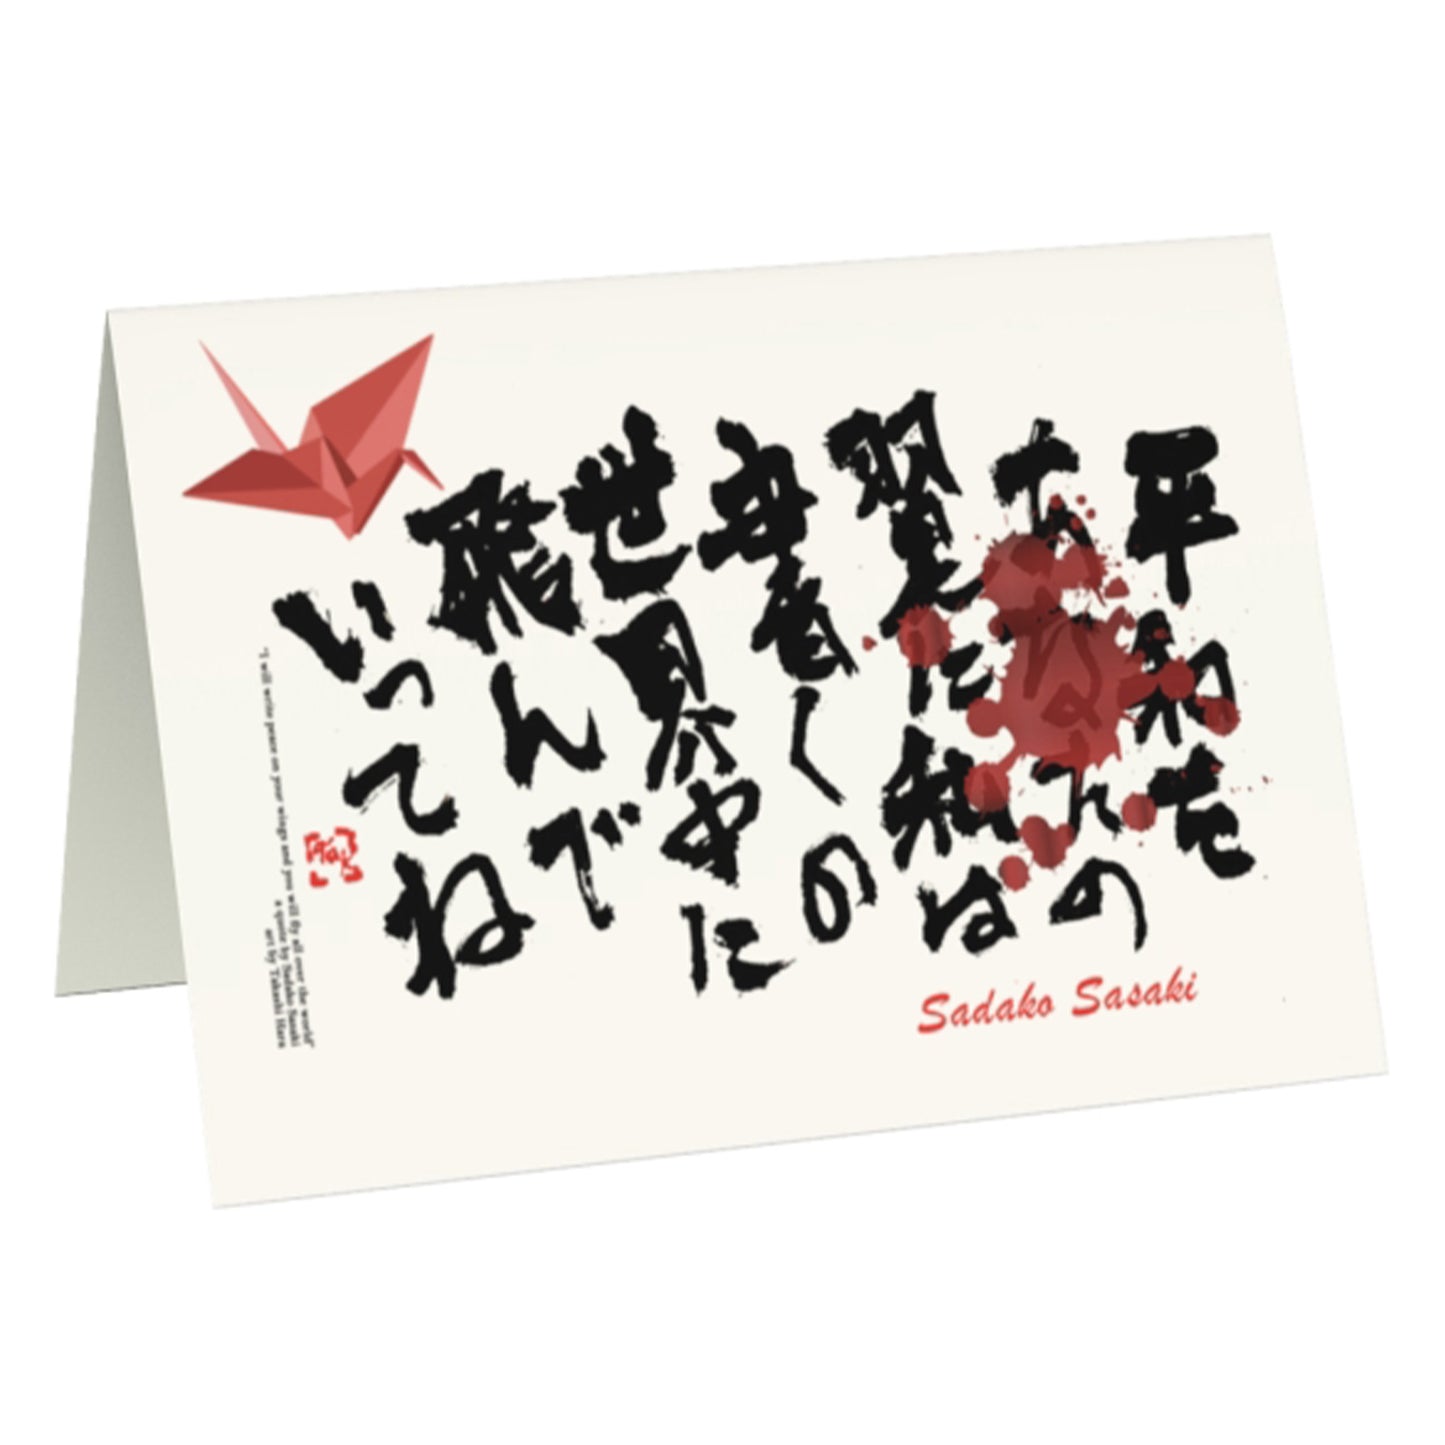 Sadako Sasaki Art Quote Greeting Card